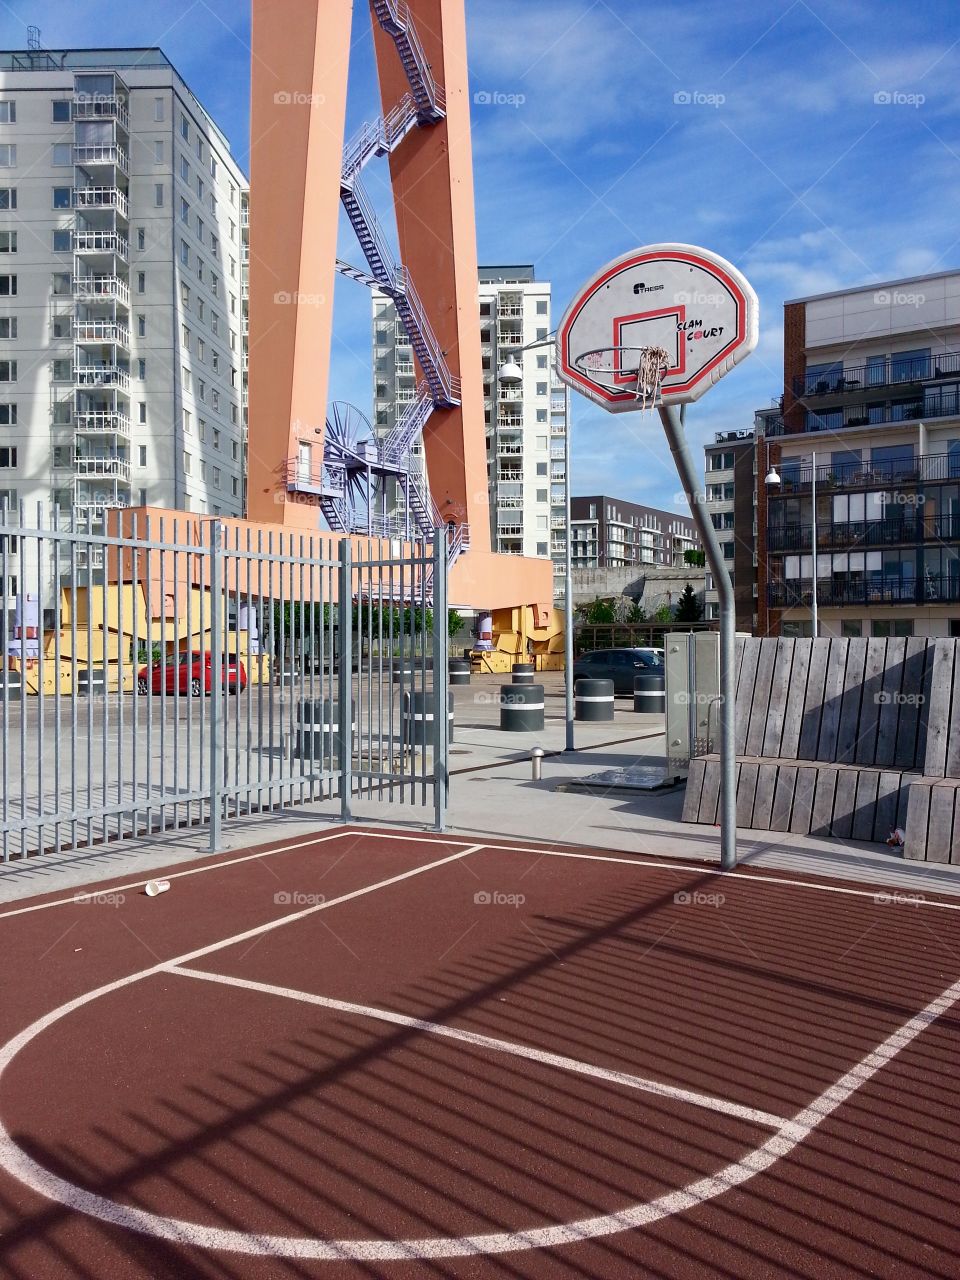 Basketball court


